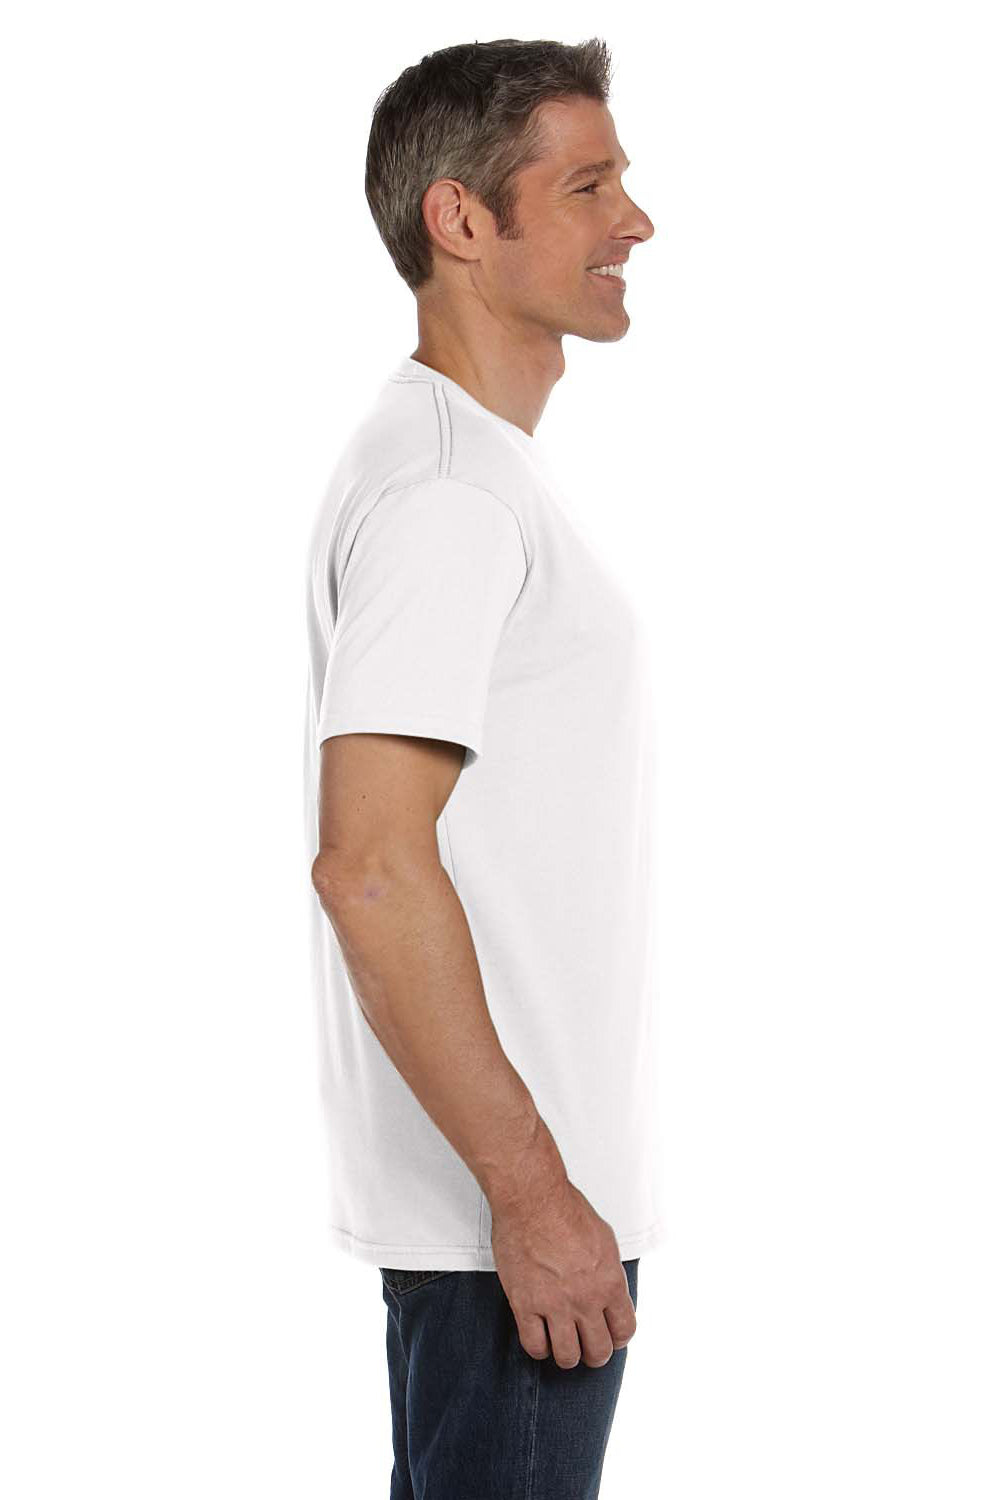 Econscious EC1000 Mens Short Sleeve Crewneck T-Shirt White Side